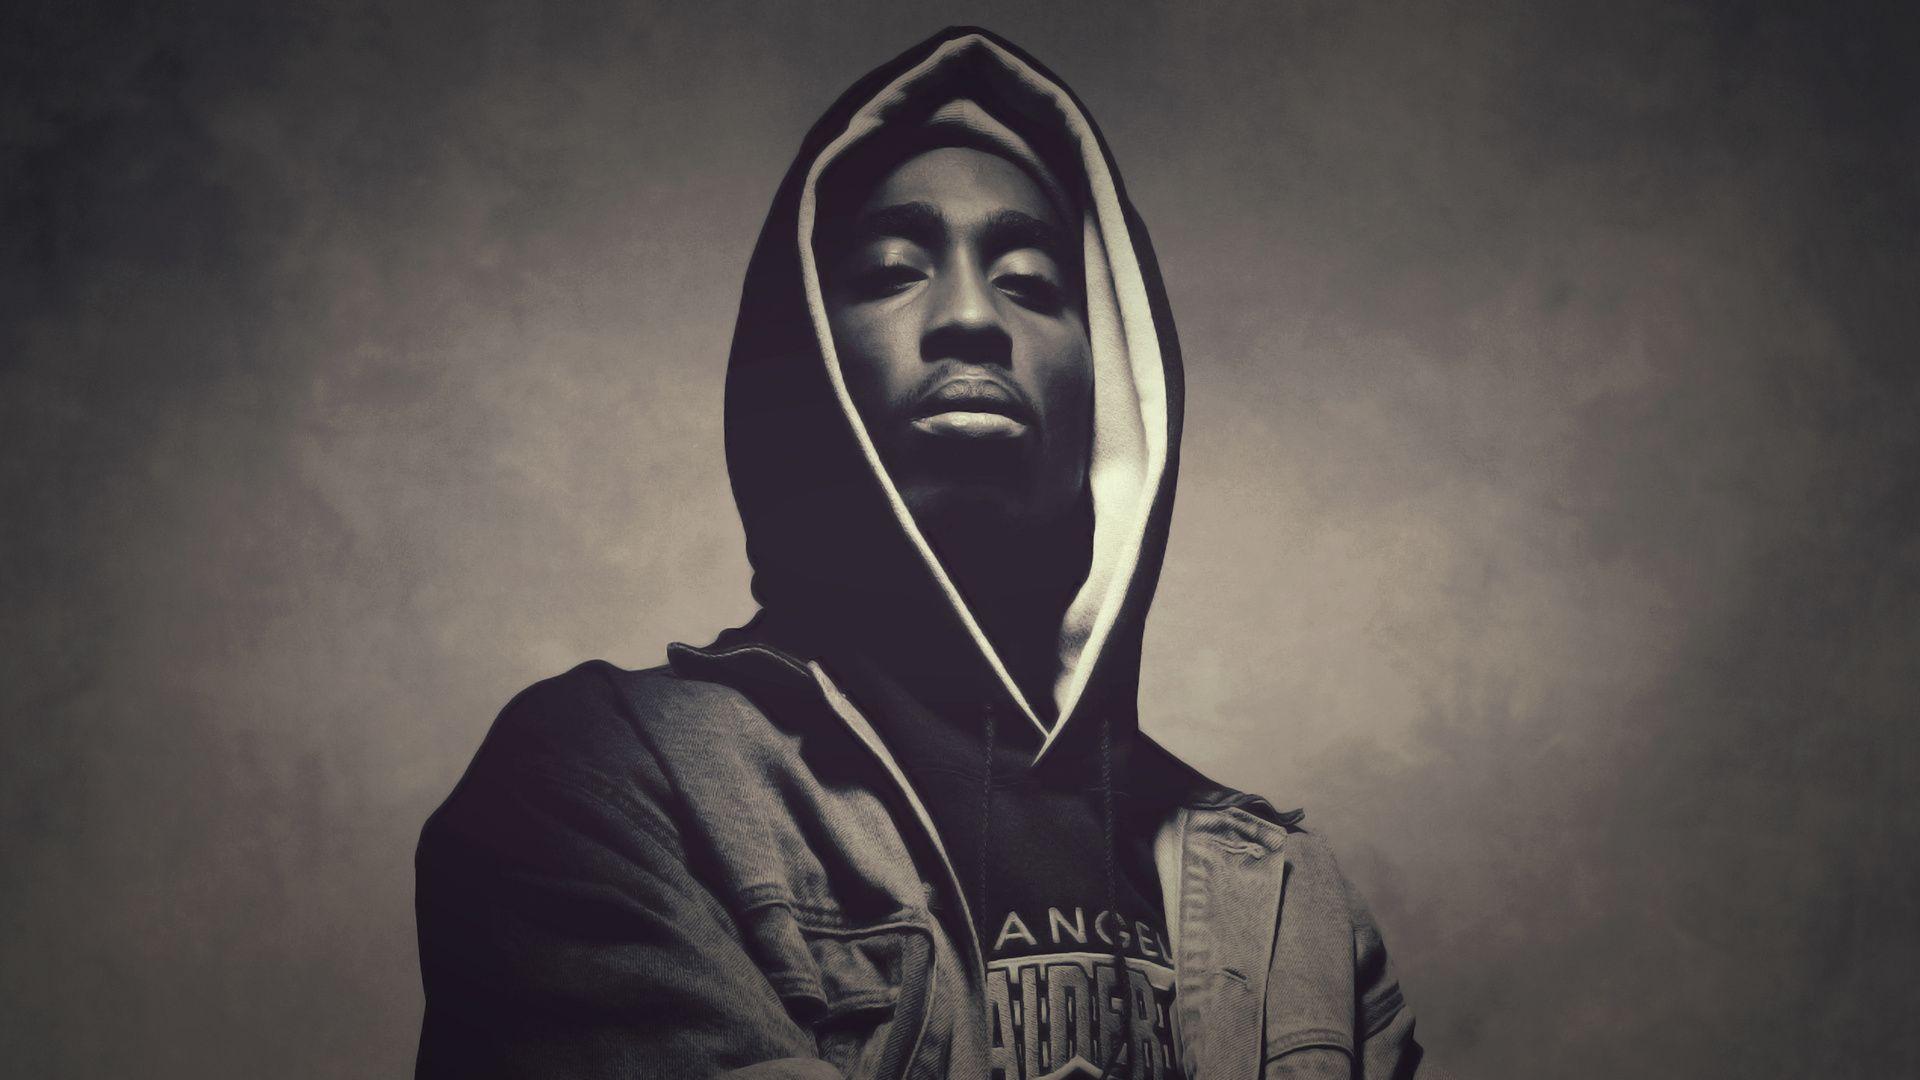 Rap, Nigga King Shakur 2pac Rap King West Coast Tupac